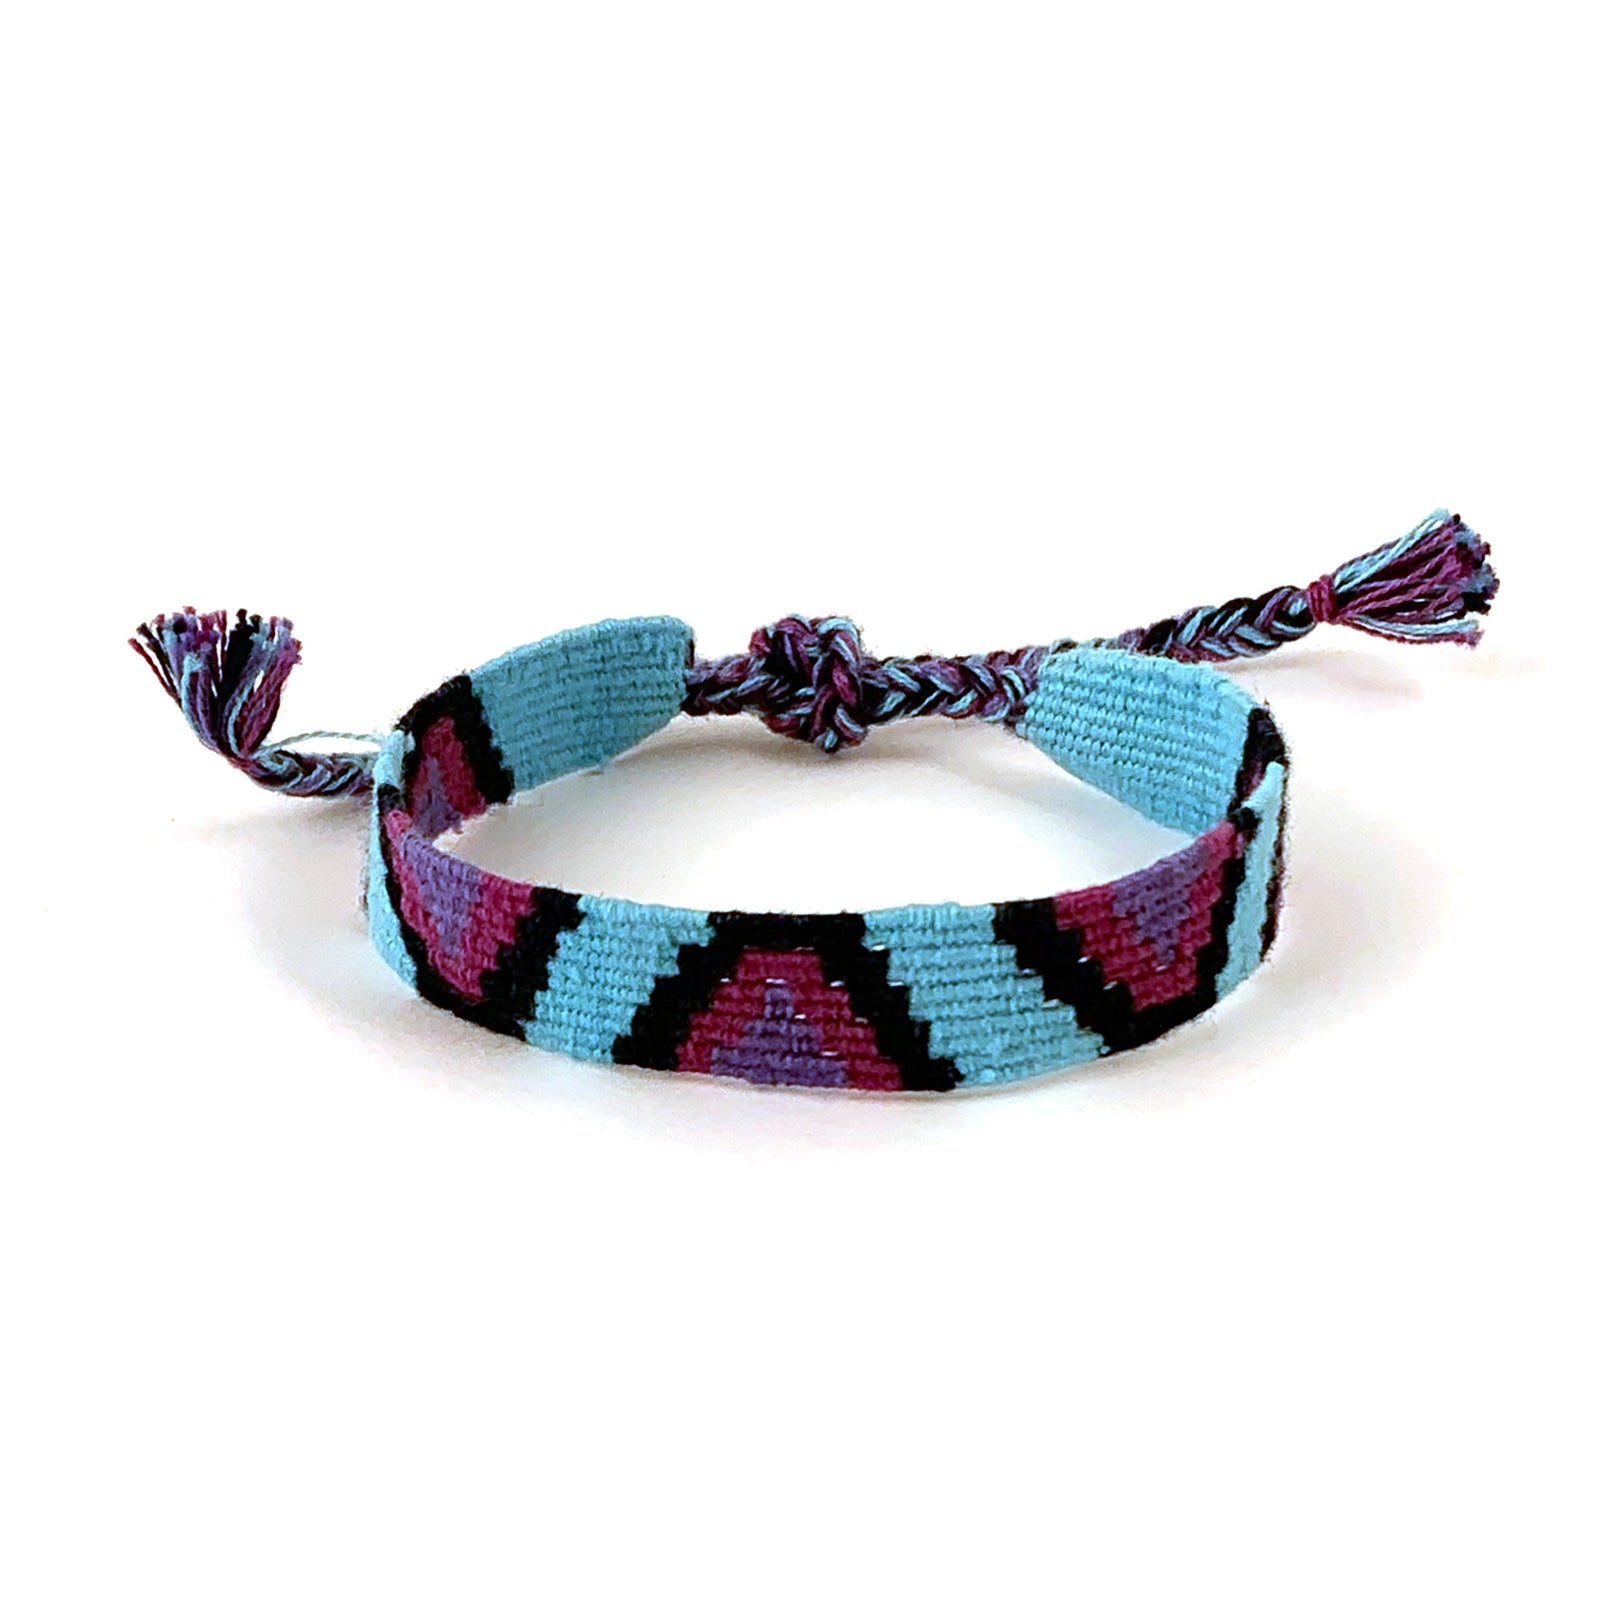 Friendship bracelet - Guatemala & Peru – Fair and Square Imports